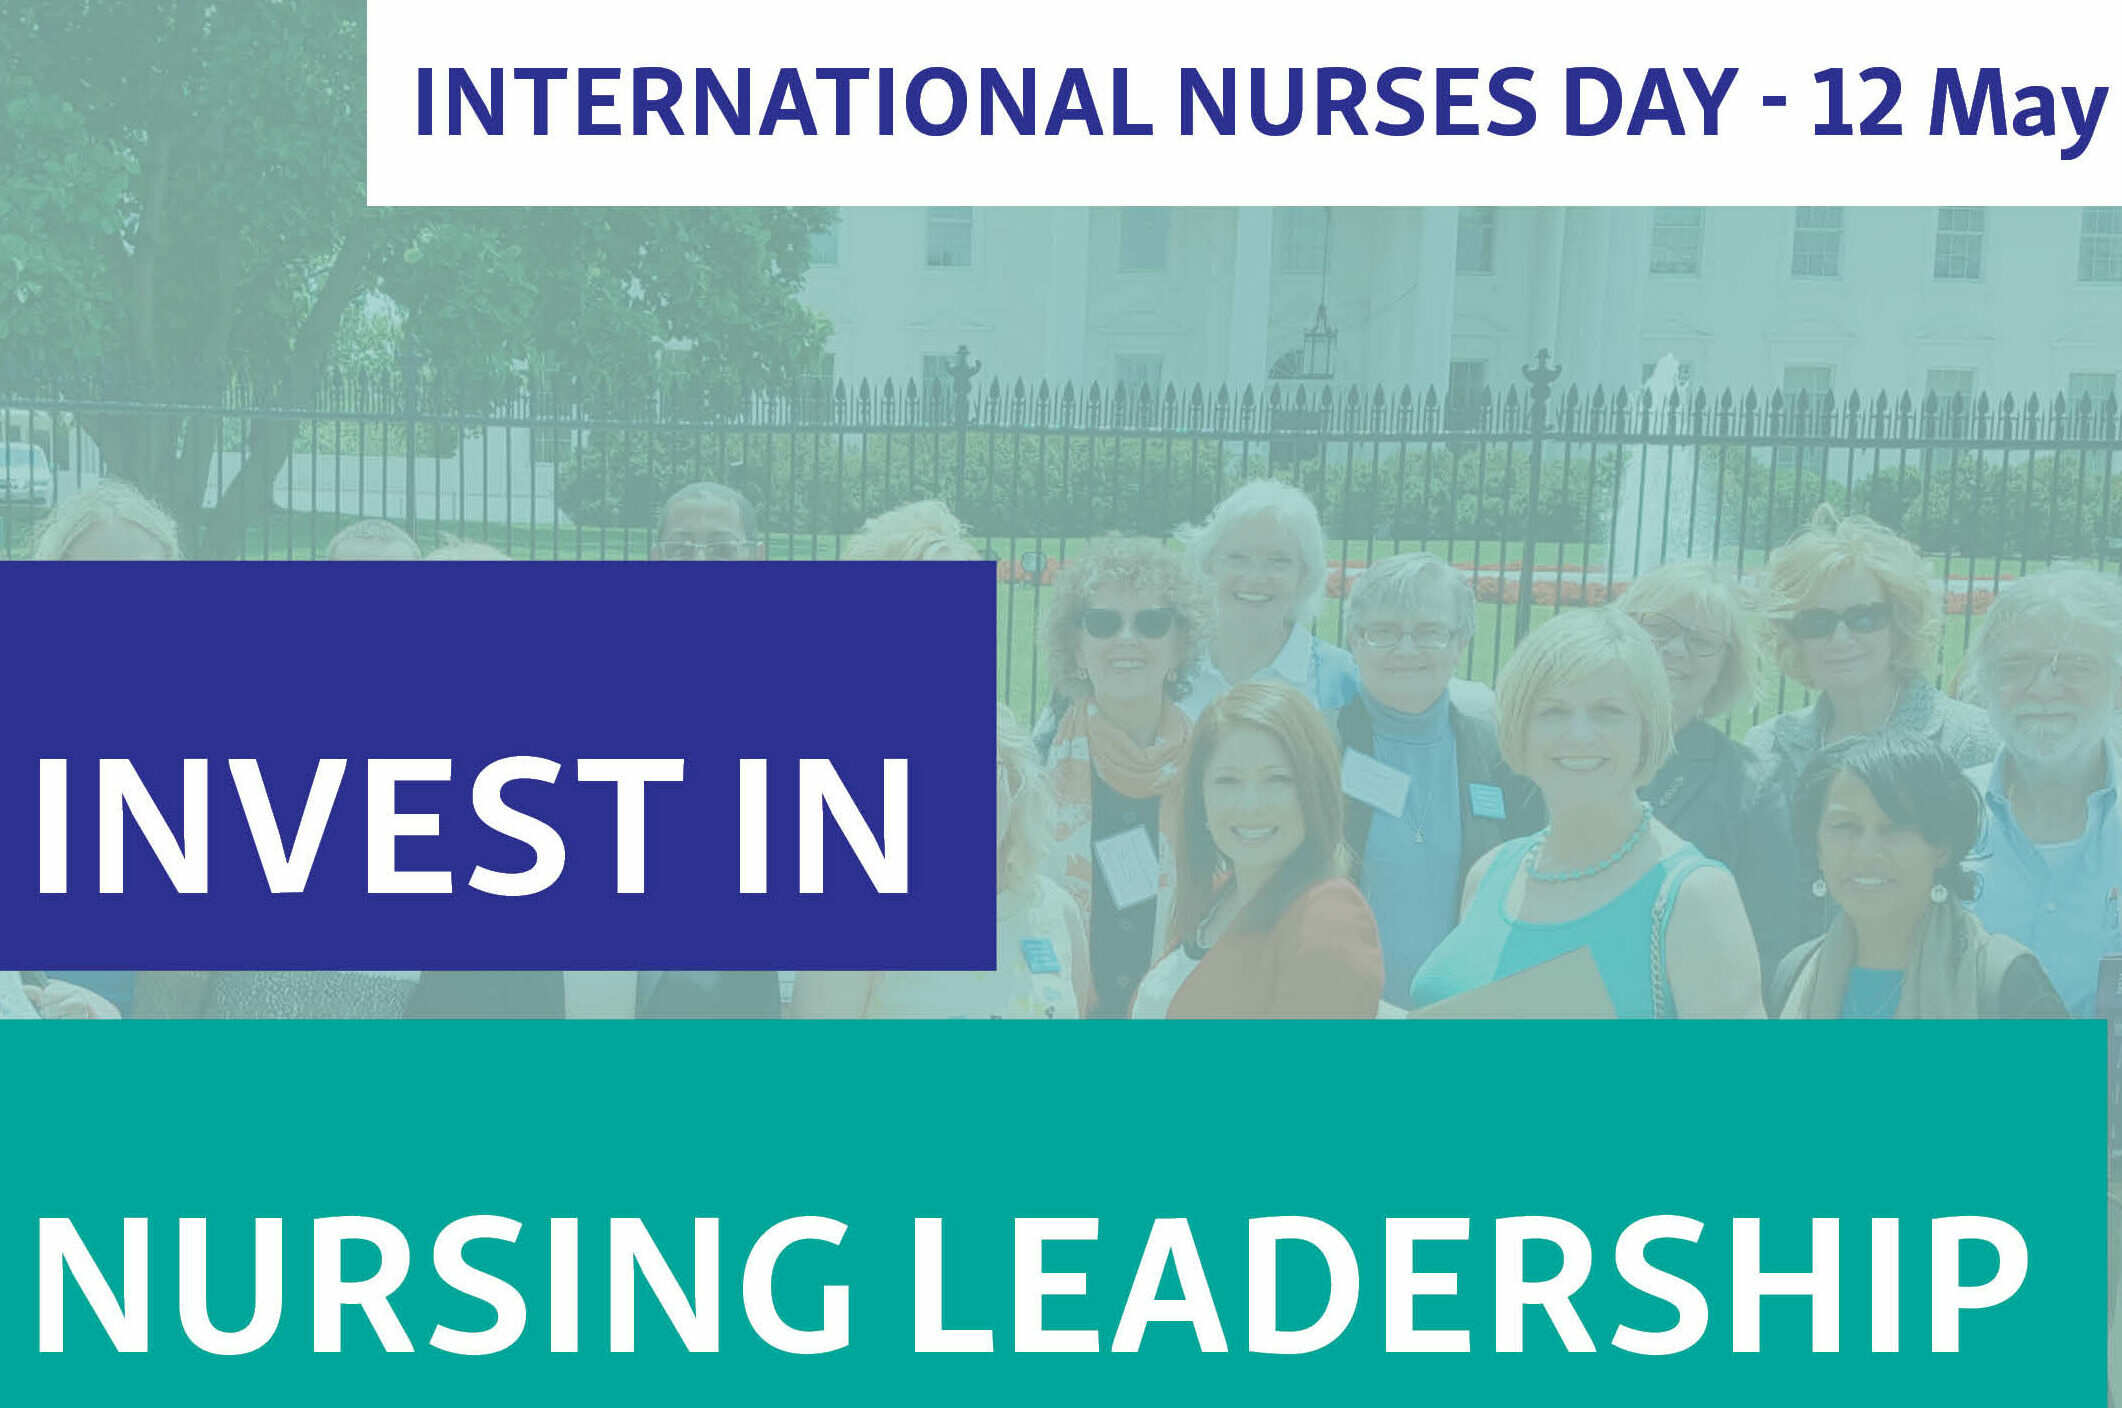 International Nurses Day poster